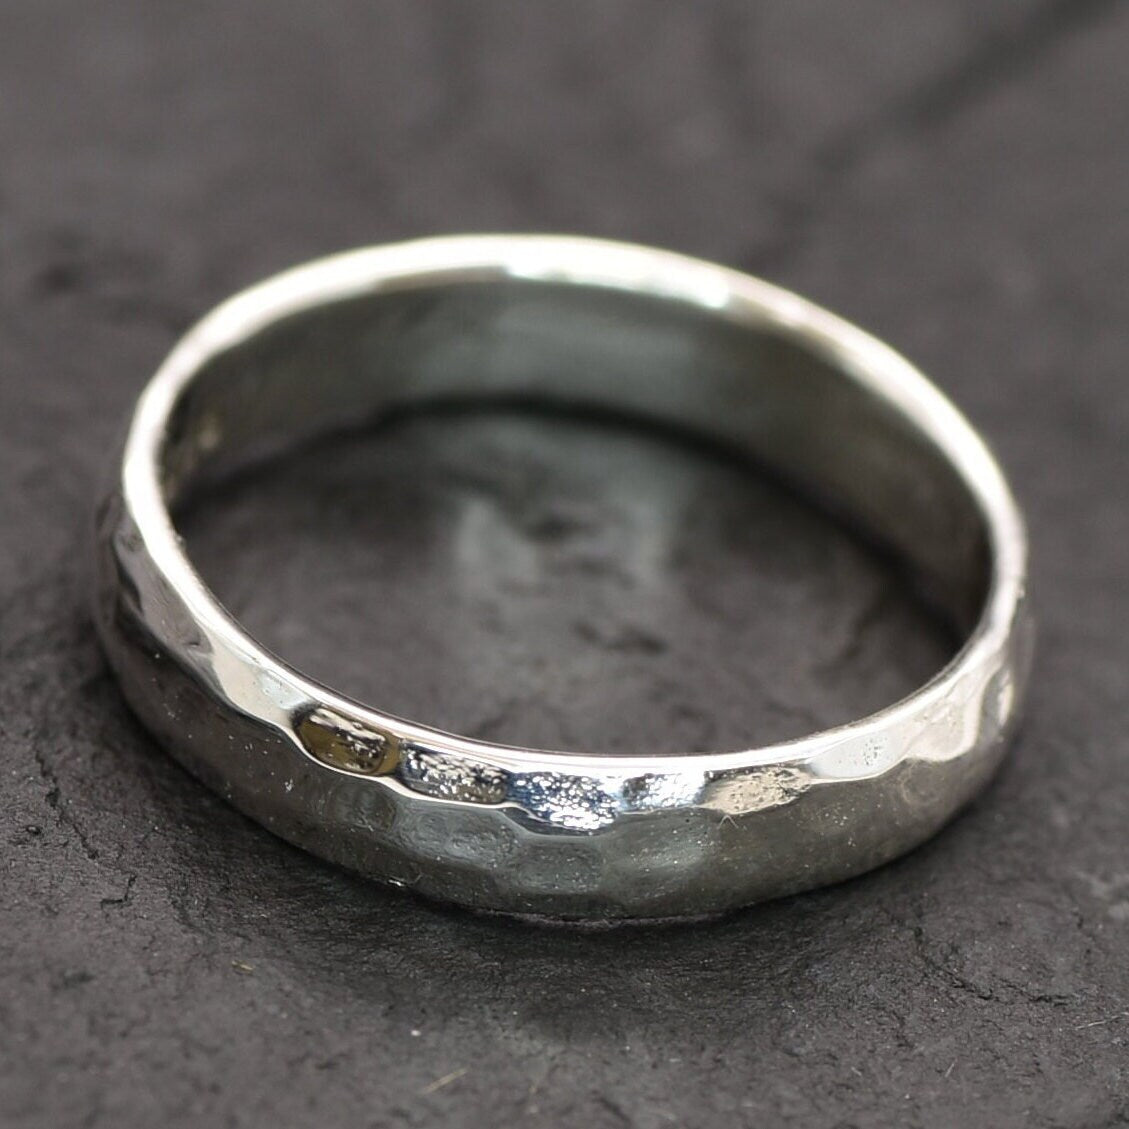 Hammered Silver Band, Hammered Wedding Ring, Sterling Silver Hammered Ring, Unisex Wedding Band, Everyday Ring, Handmade Hammered Ring